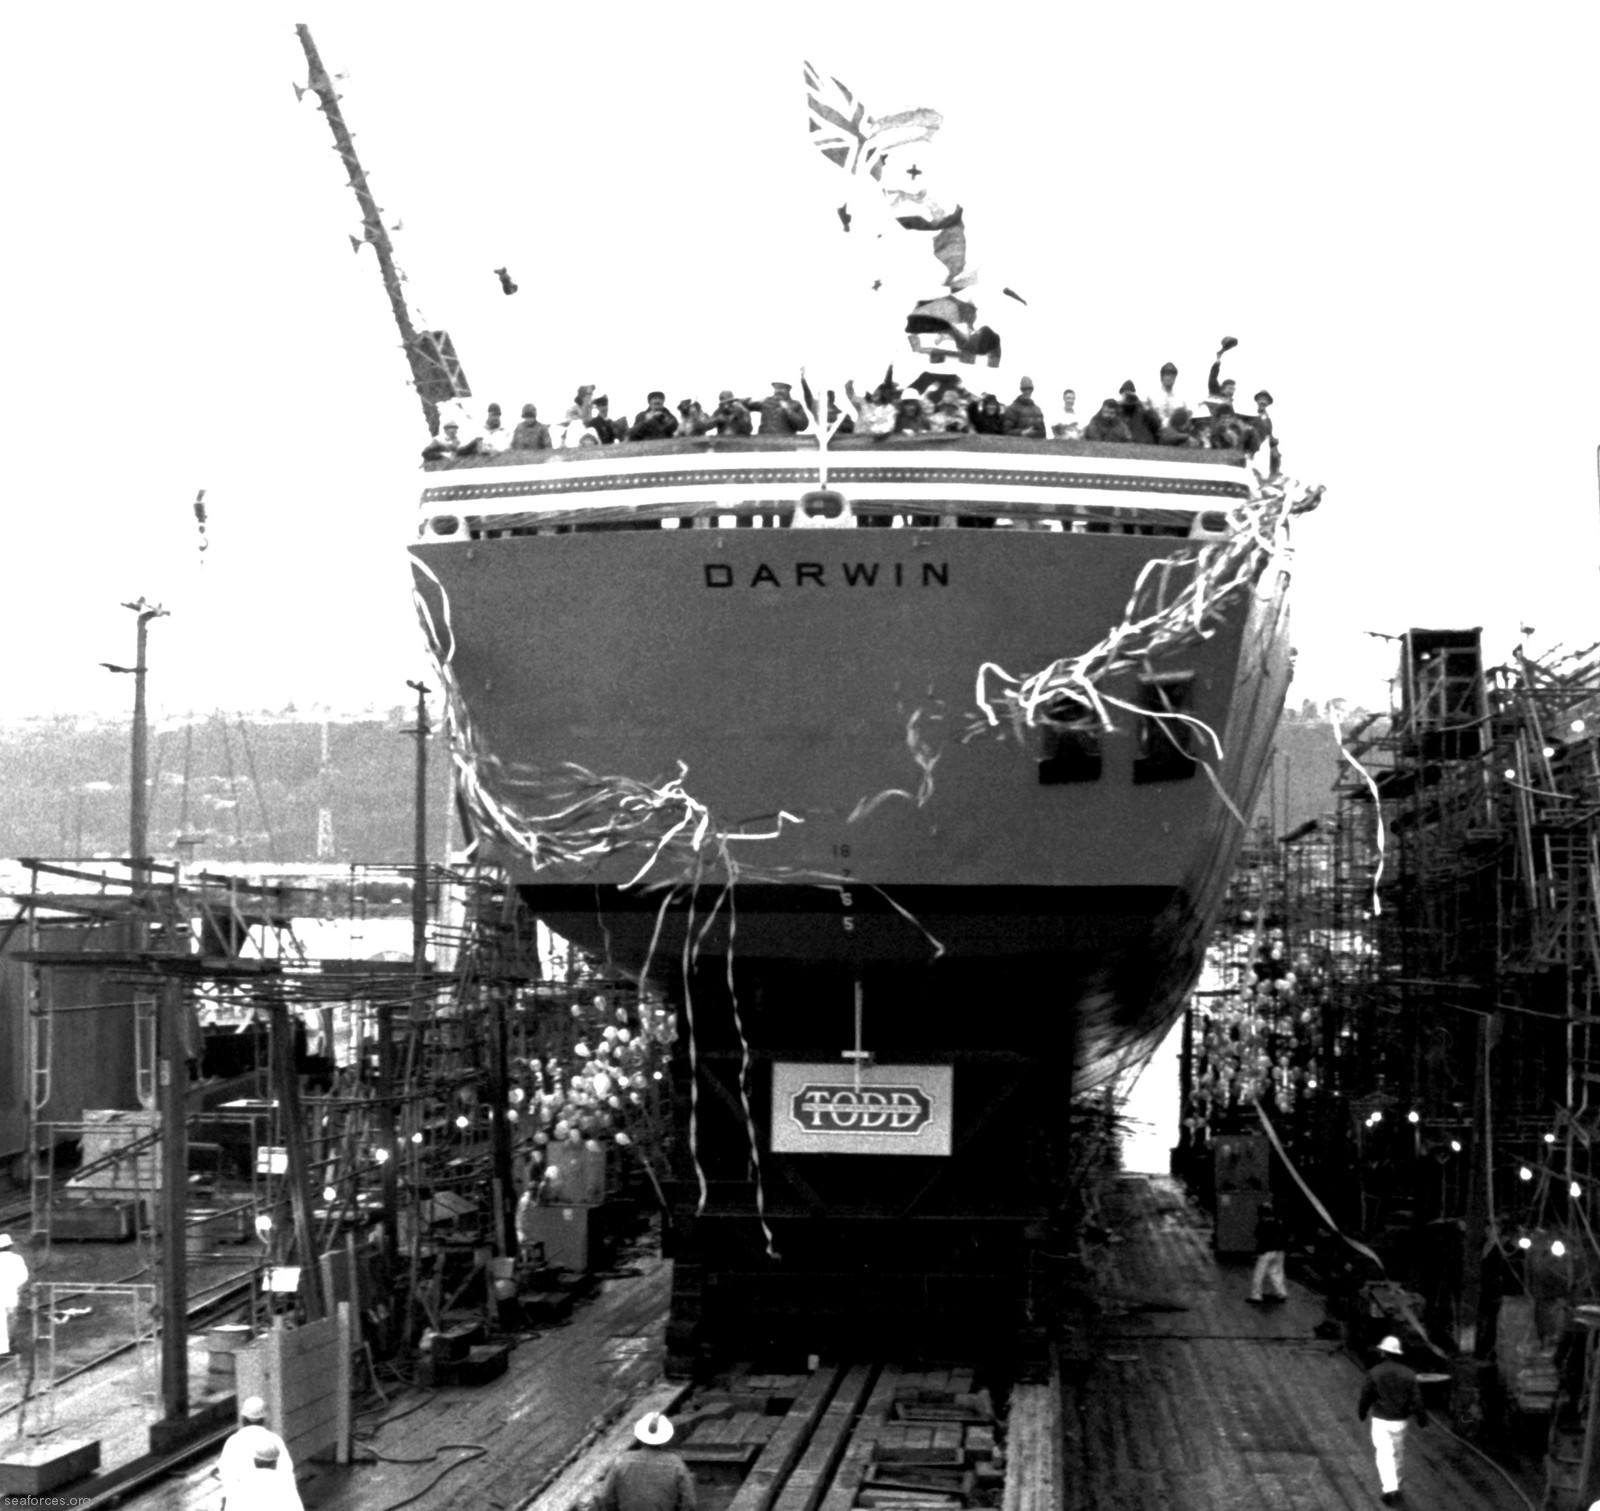 ffg-04 hmas darwin adelaide class frigate royal australian navy 1982 launching ceremony todd pacific shipyards seattle